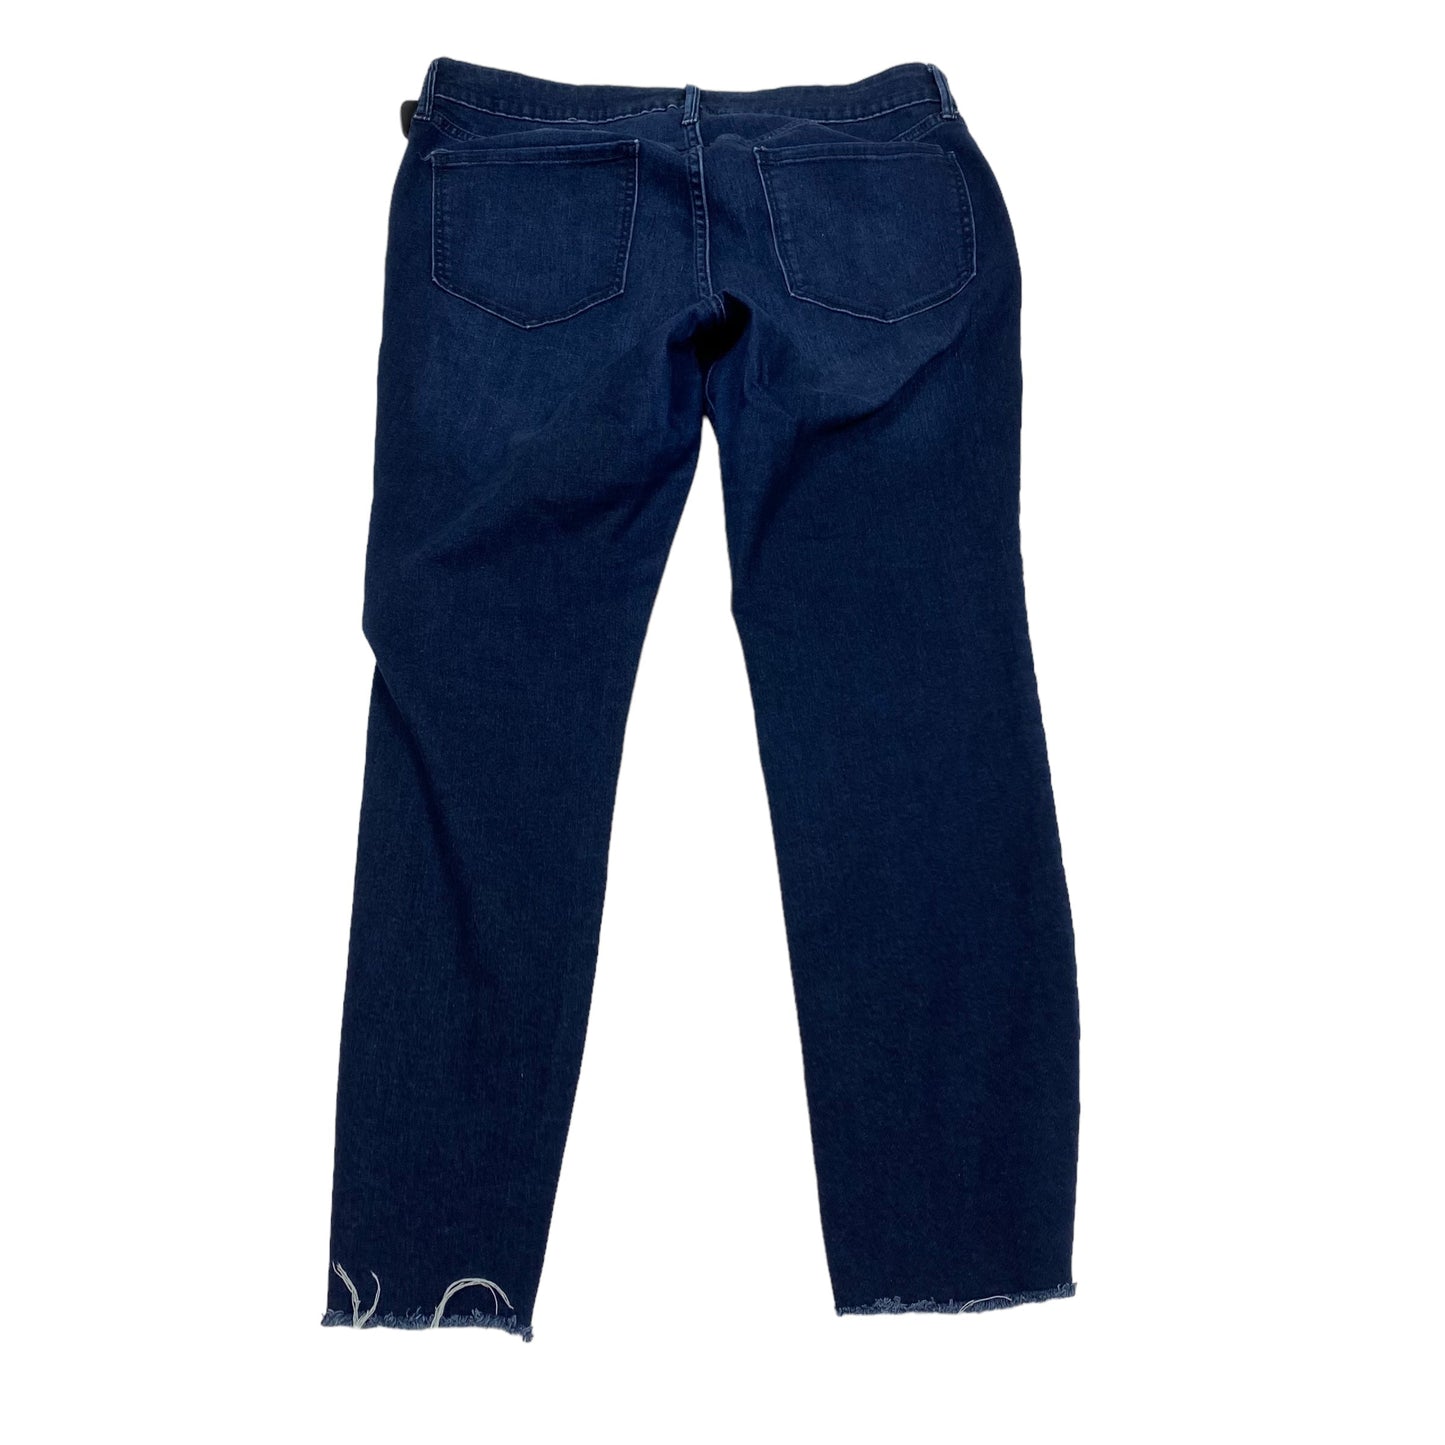 Blue Denim Jeans Skinny Old Navy, Size 12